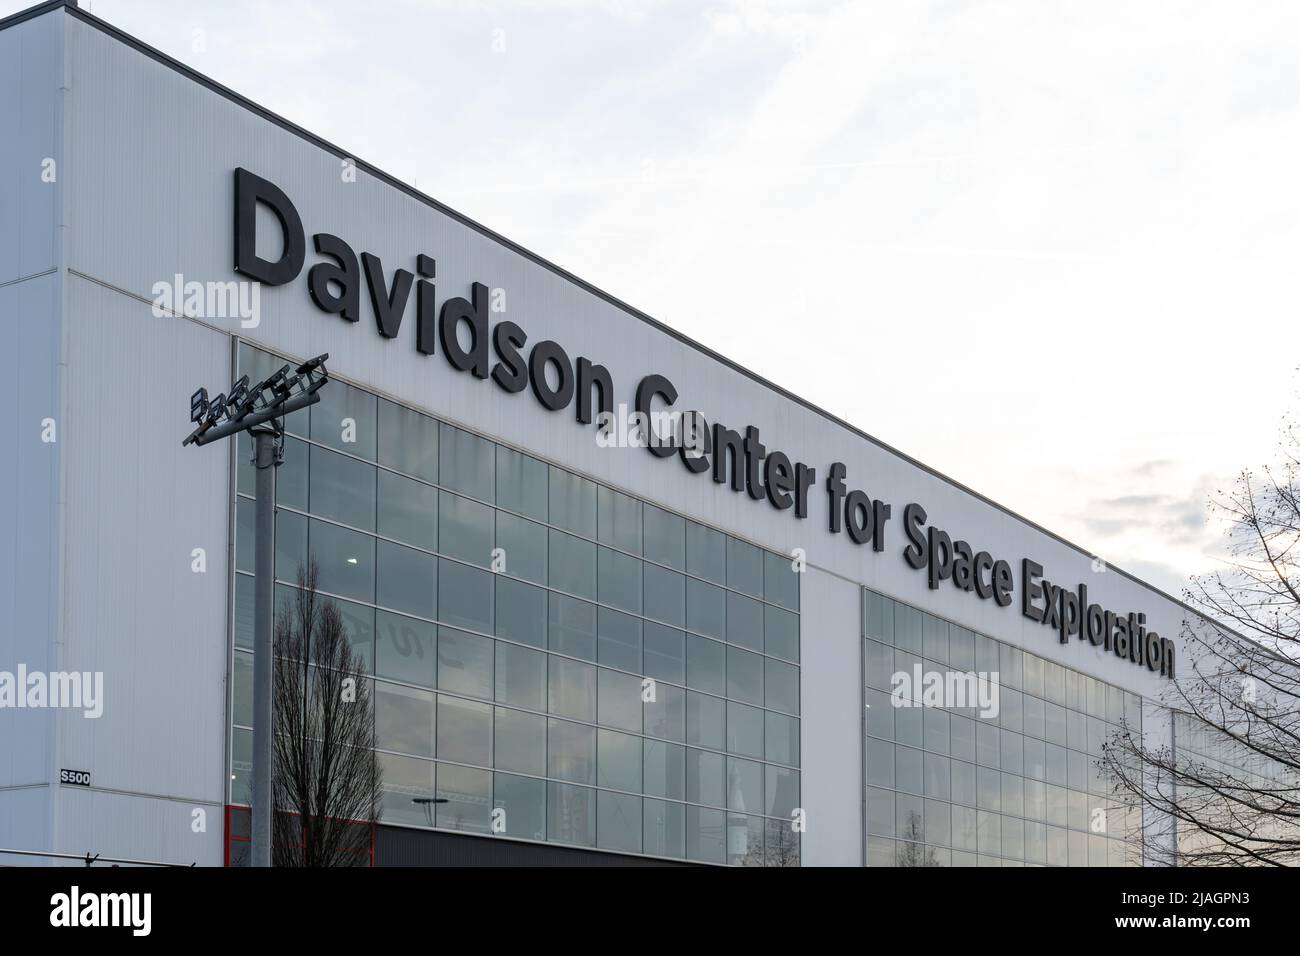 Huntsville, Alabama, USA - December 29, 2021: Davidson Center for Space Exploration in Huntsville, Alabama, USA Stock Photo